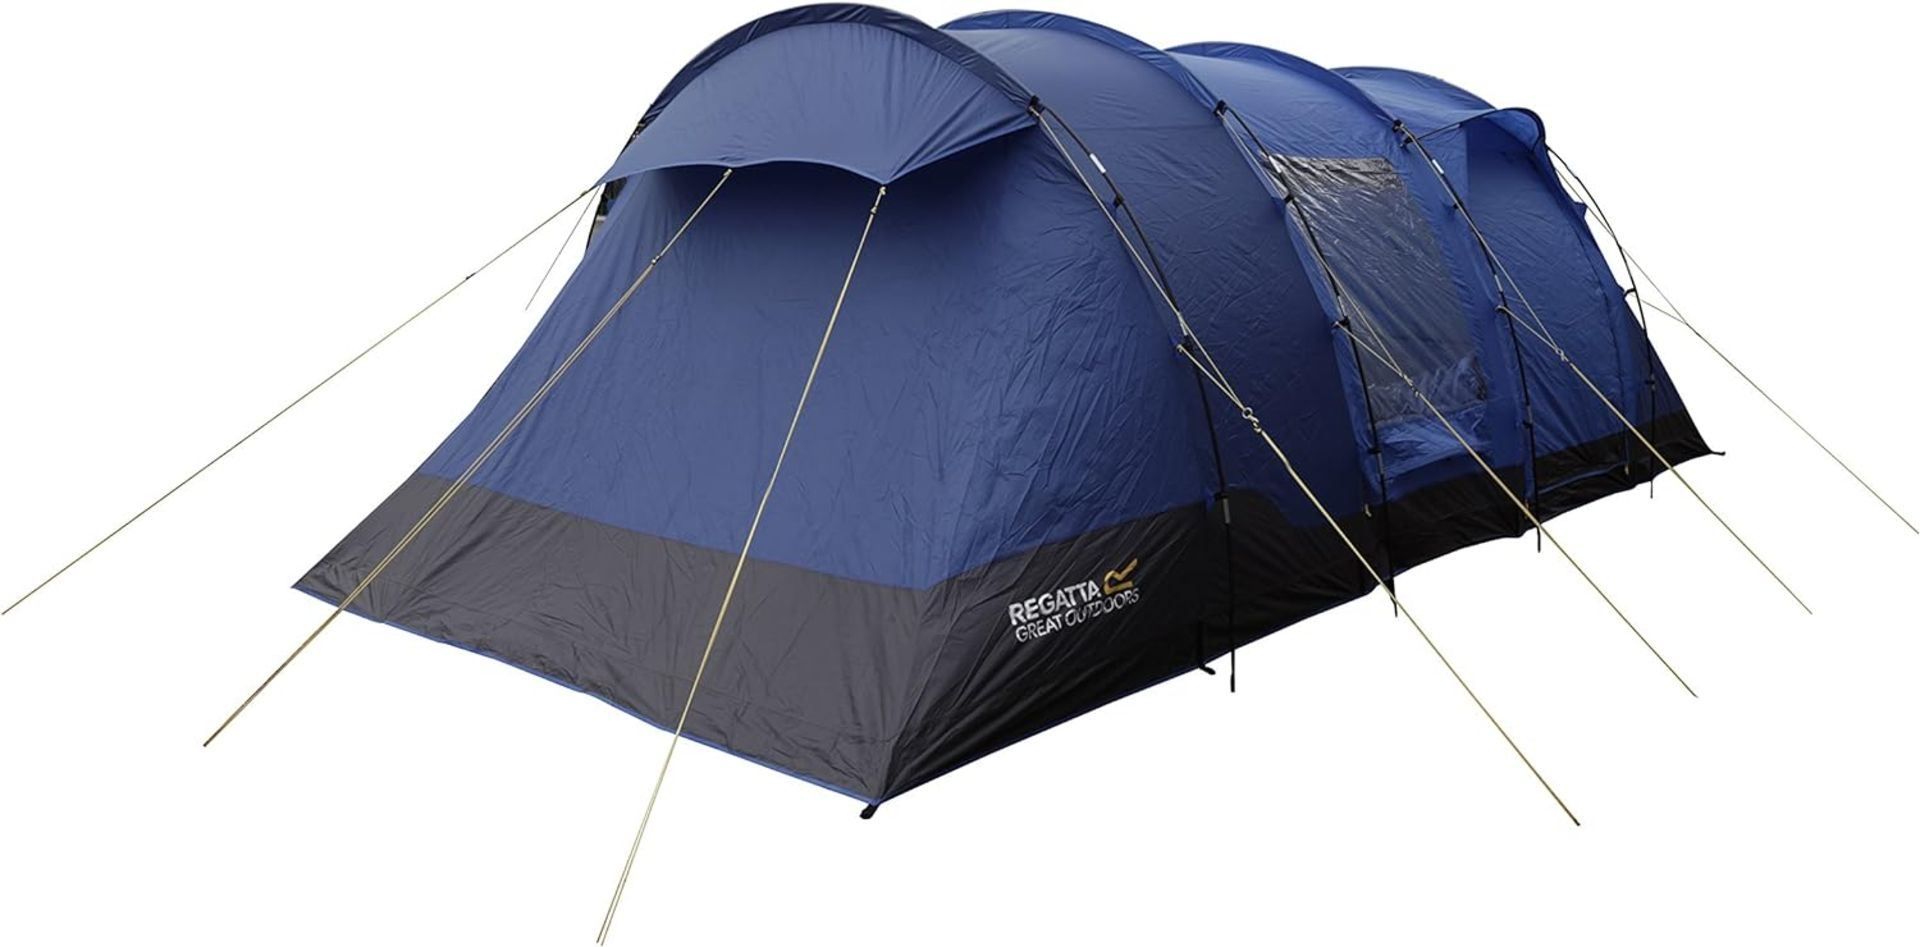 Brand New Regatta Karuna 6 man Tent. The Karuna 6-man tent offers an impressive amount of living